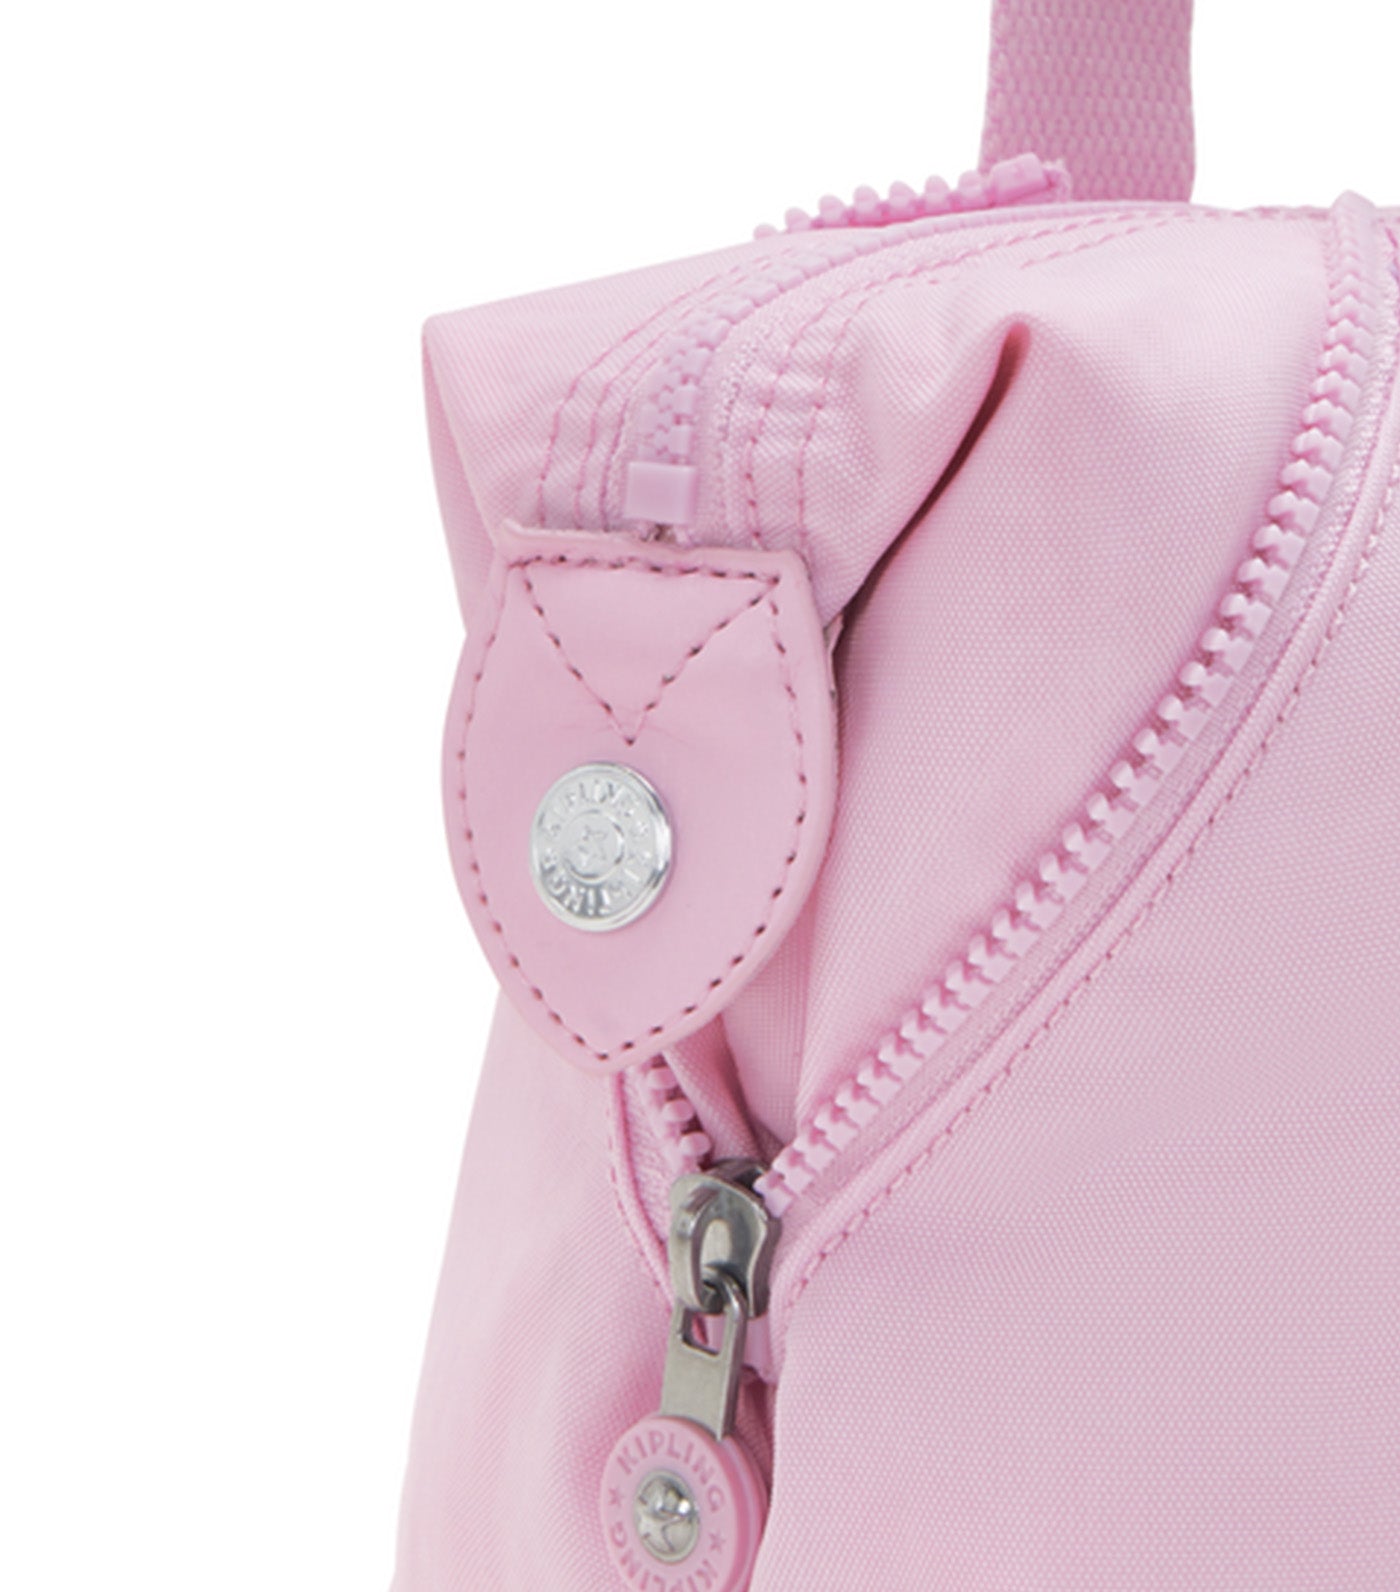 Art Mini Handbag Blooming Pink